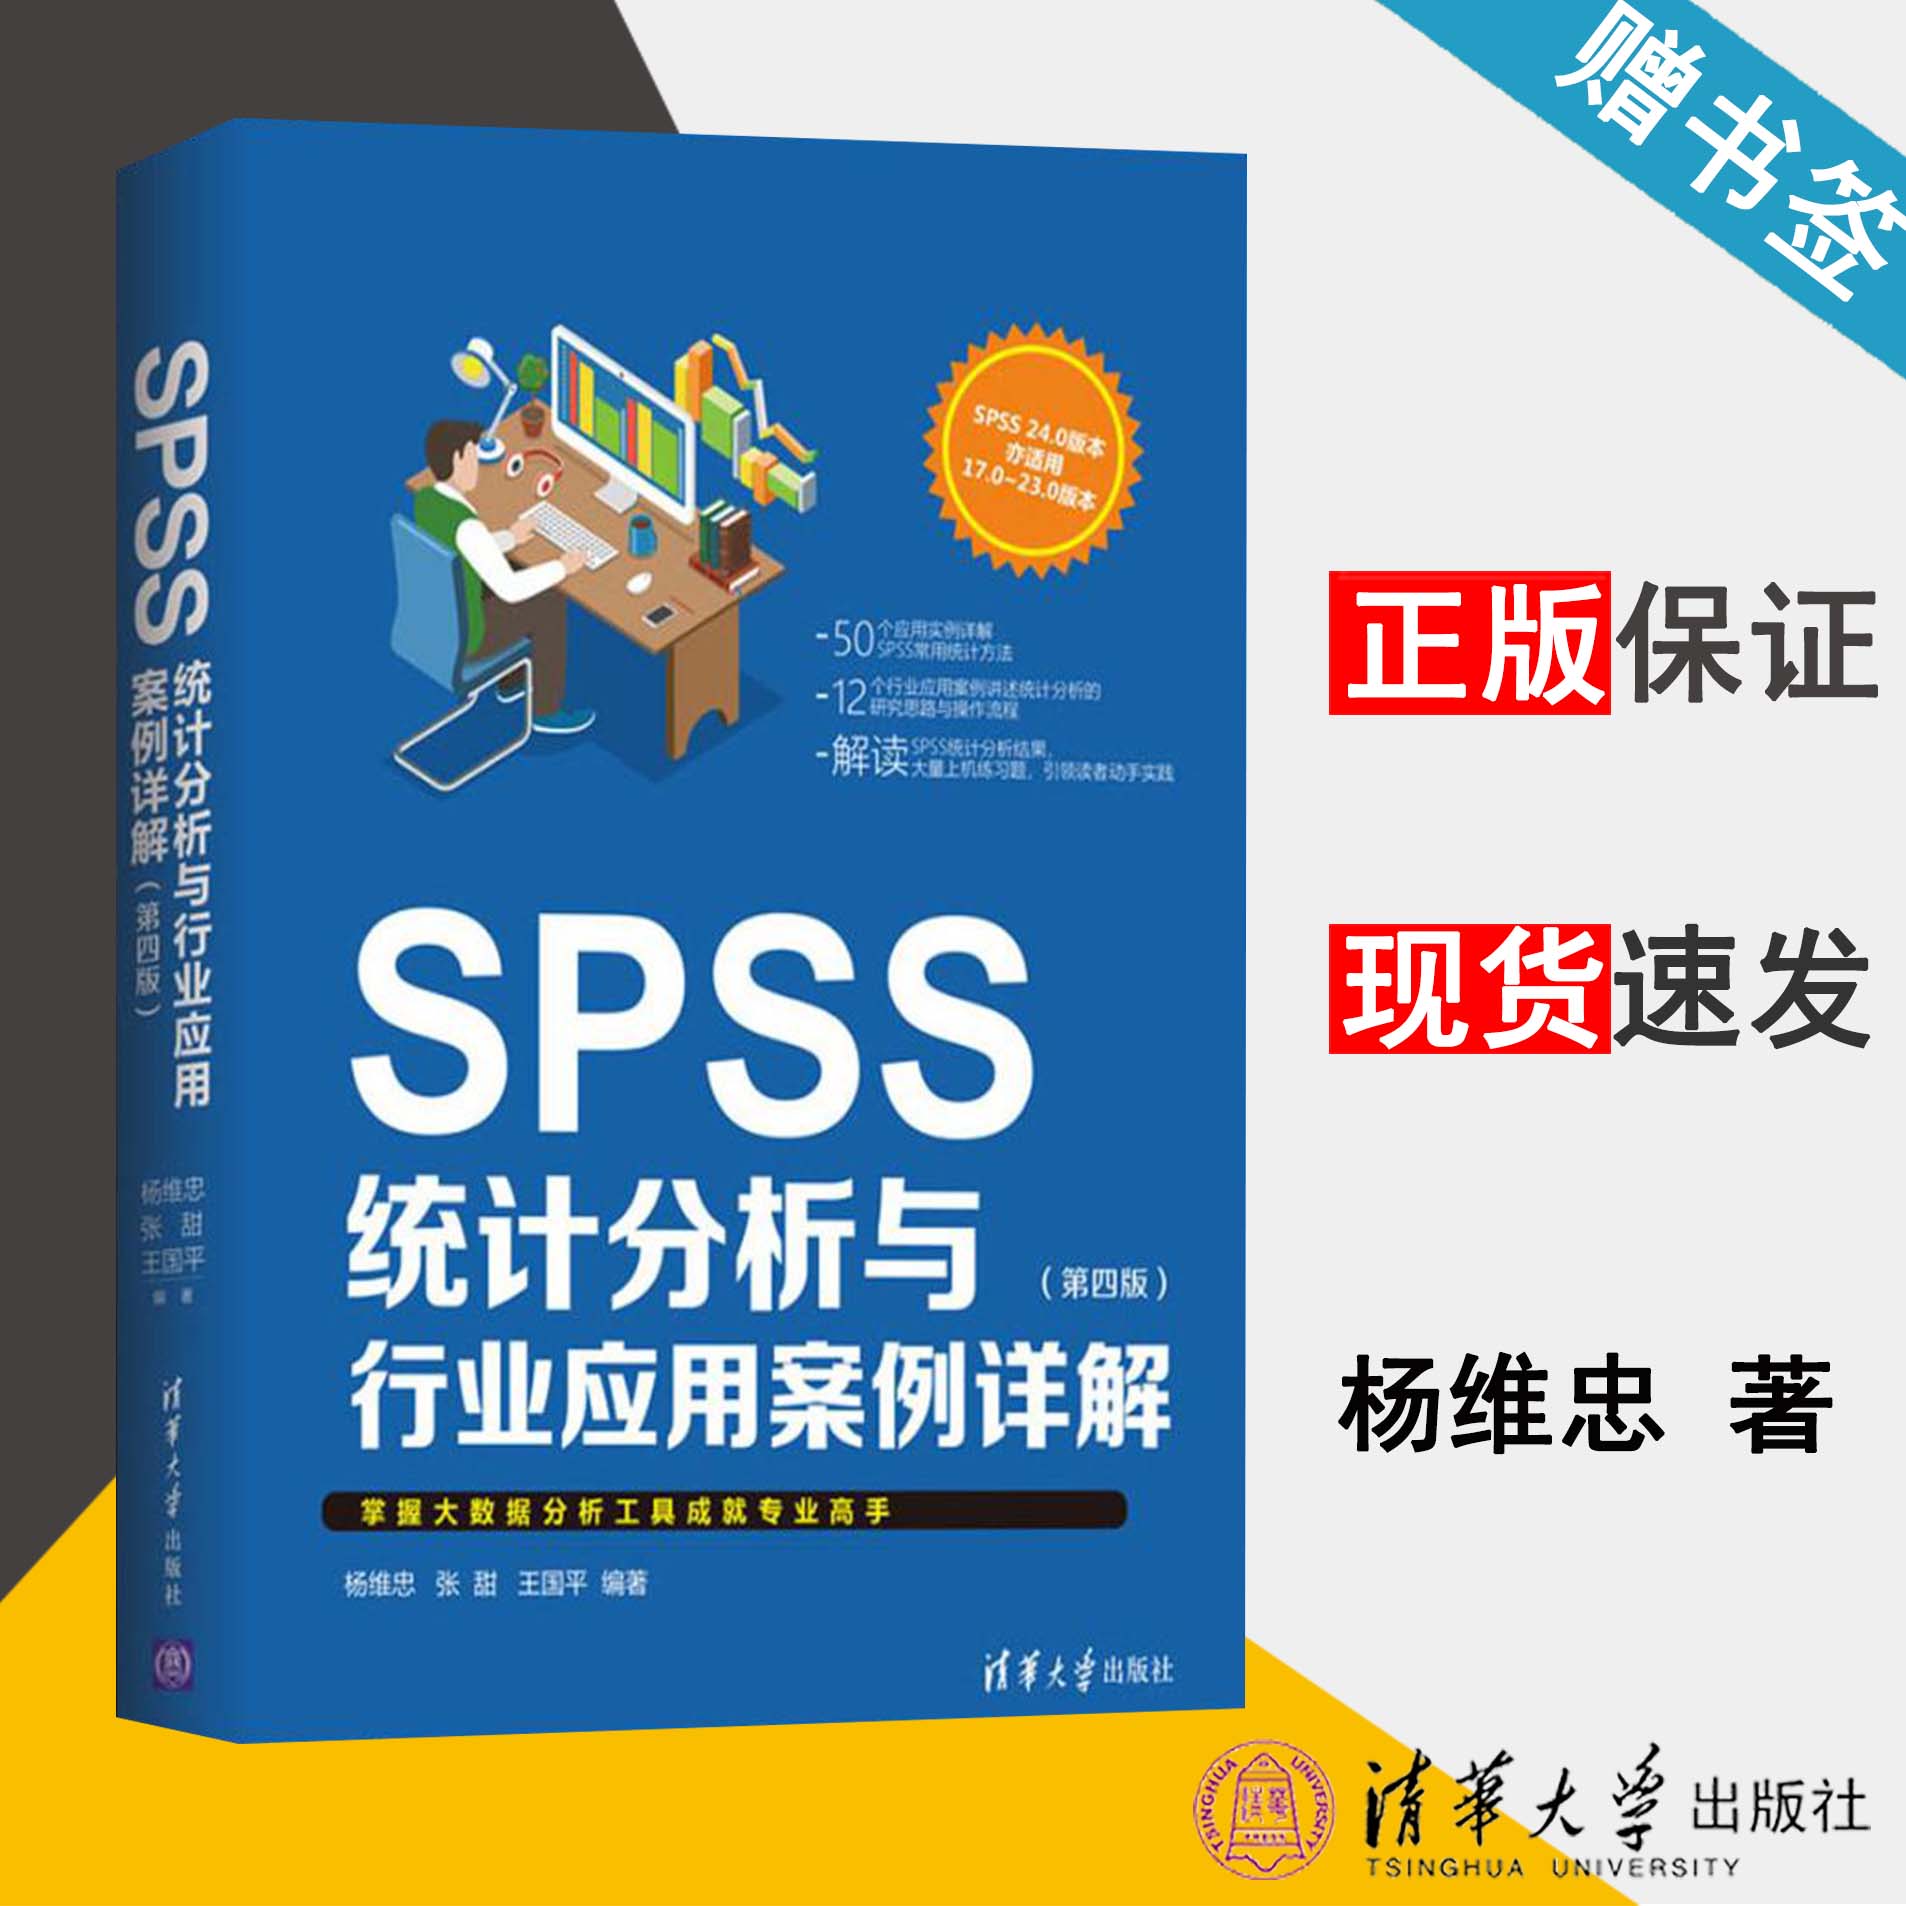 SPSS统计分析与行业应用案例详解  杨维忠 第四版 掌握大数据分析工具高手 计算机软件工程 计算机类 清华大学出版社 书籍